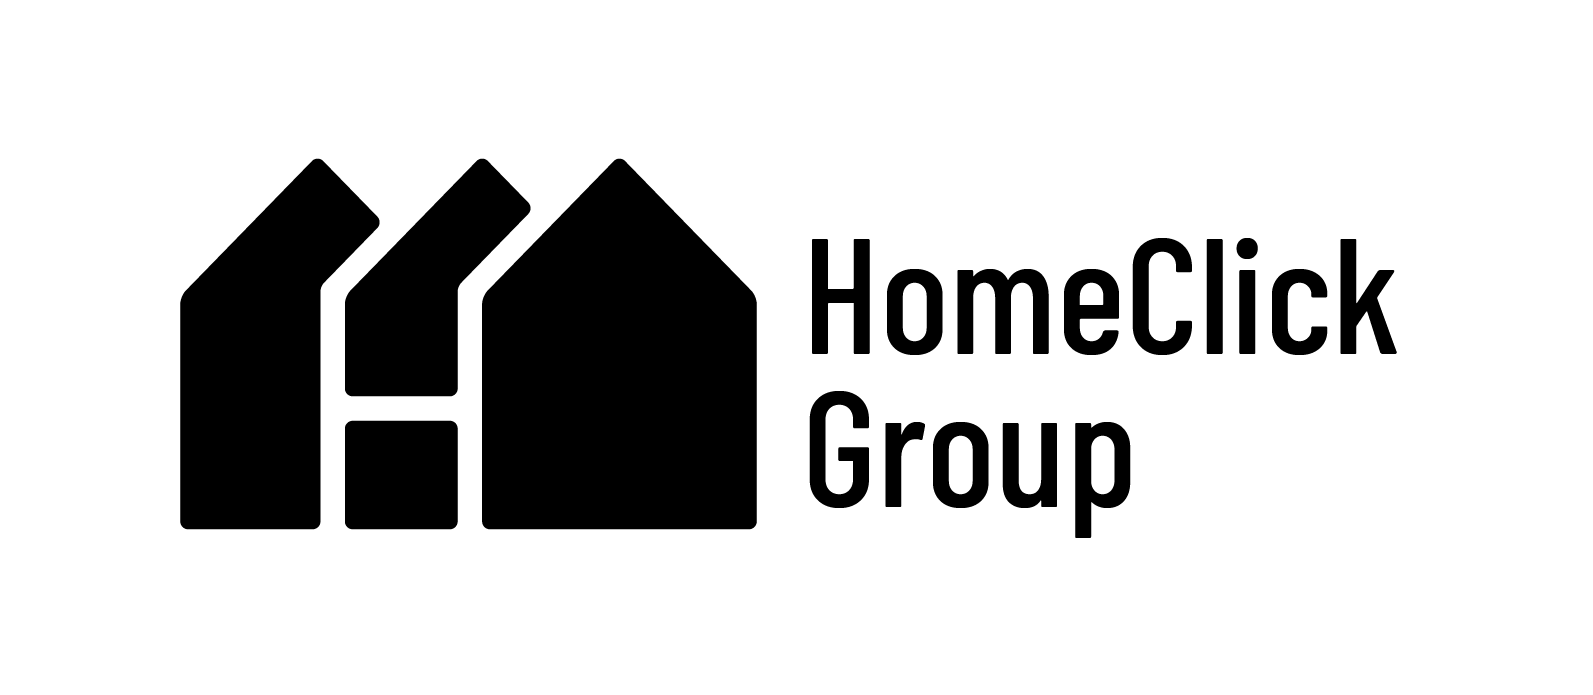 homeclick group logo